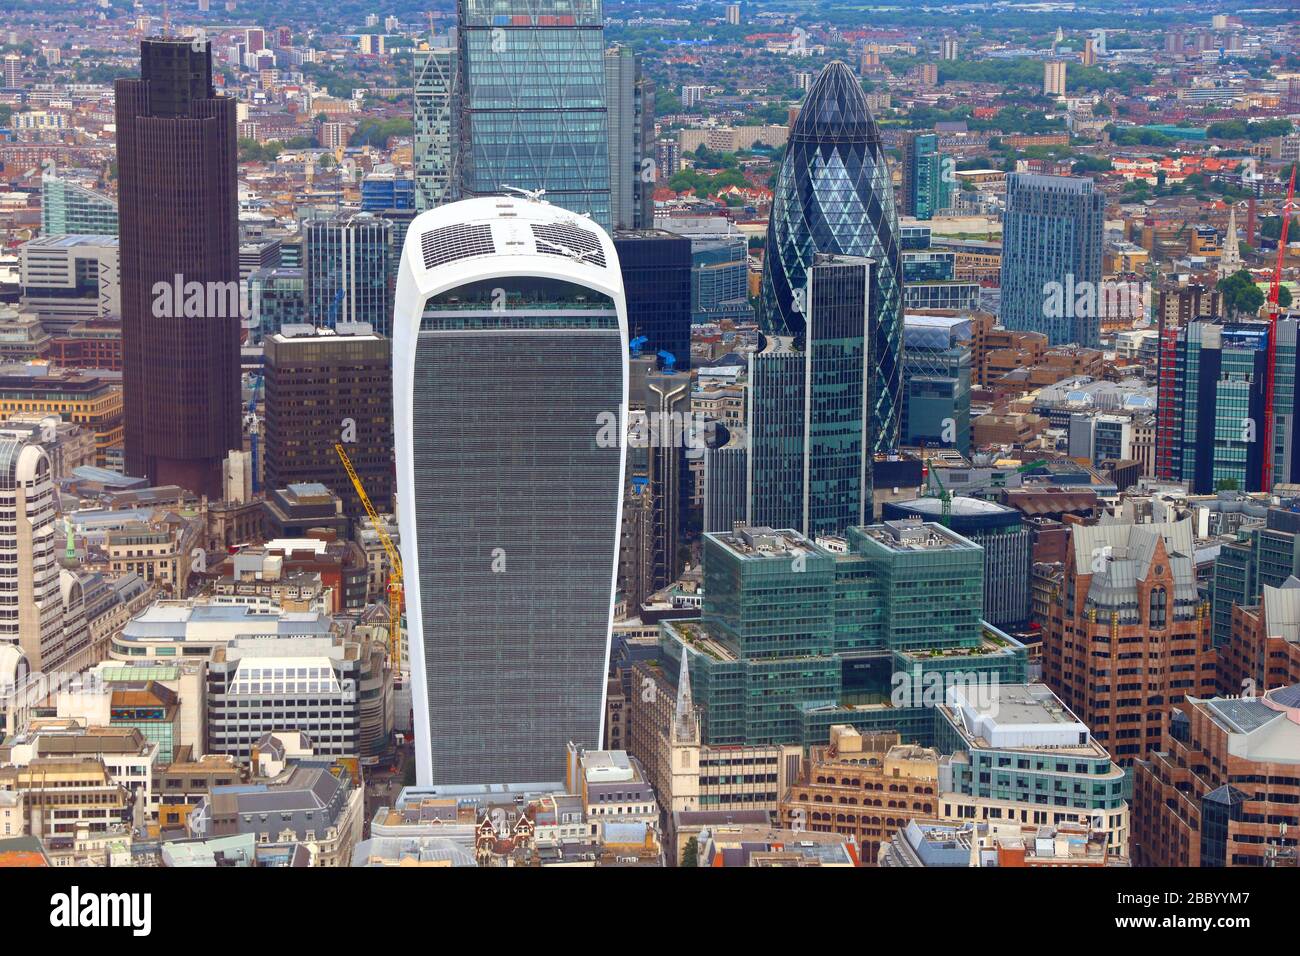 City of London skyline - capital city of the UK. Stock Photo